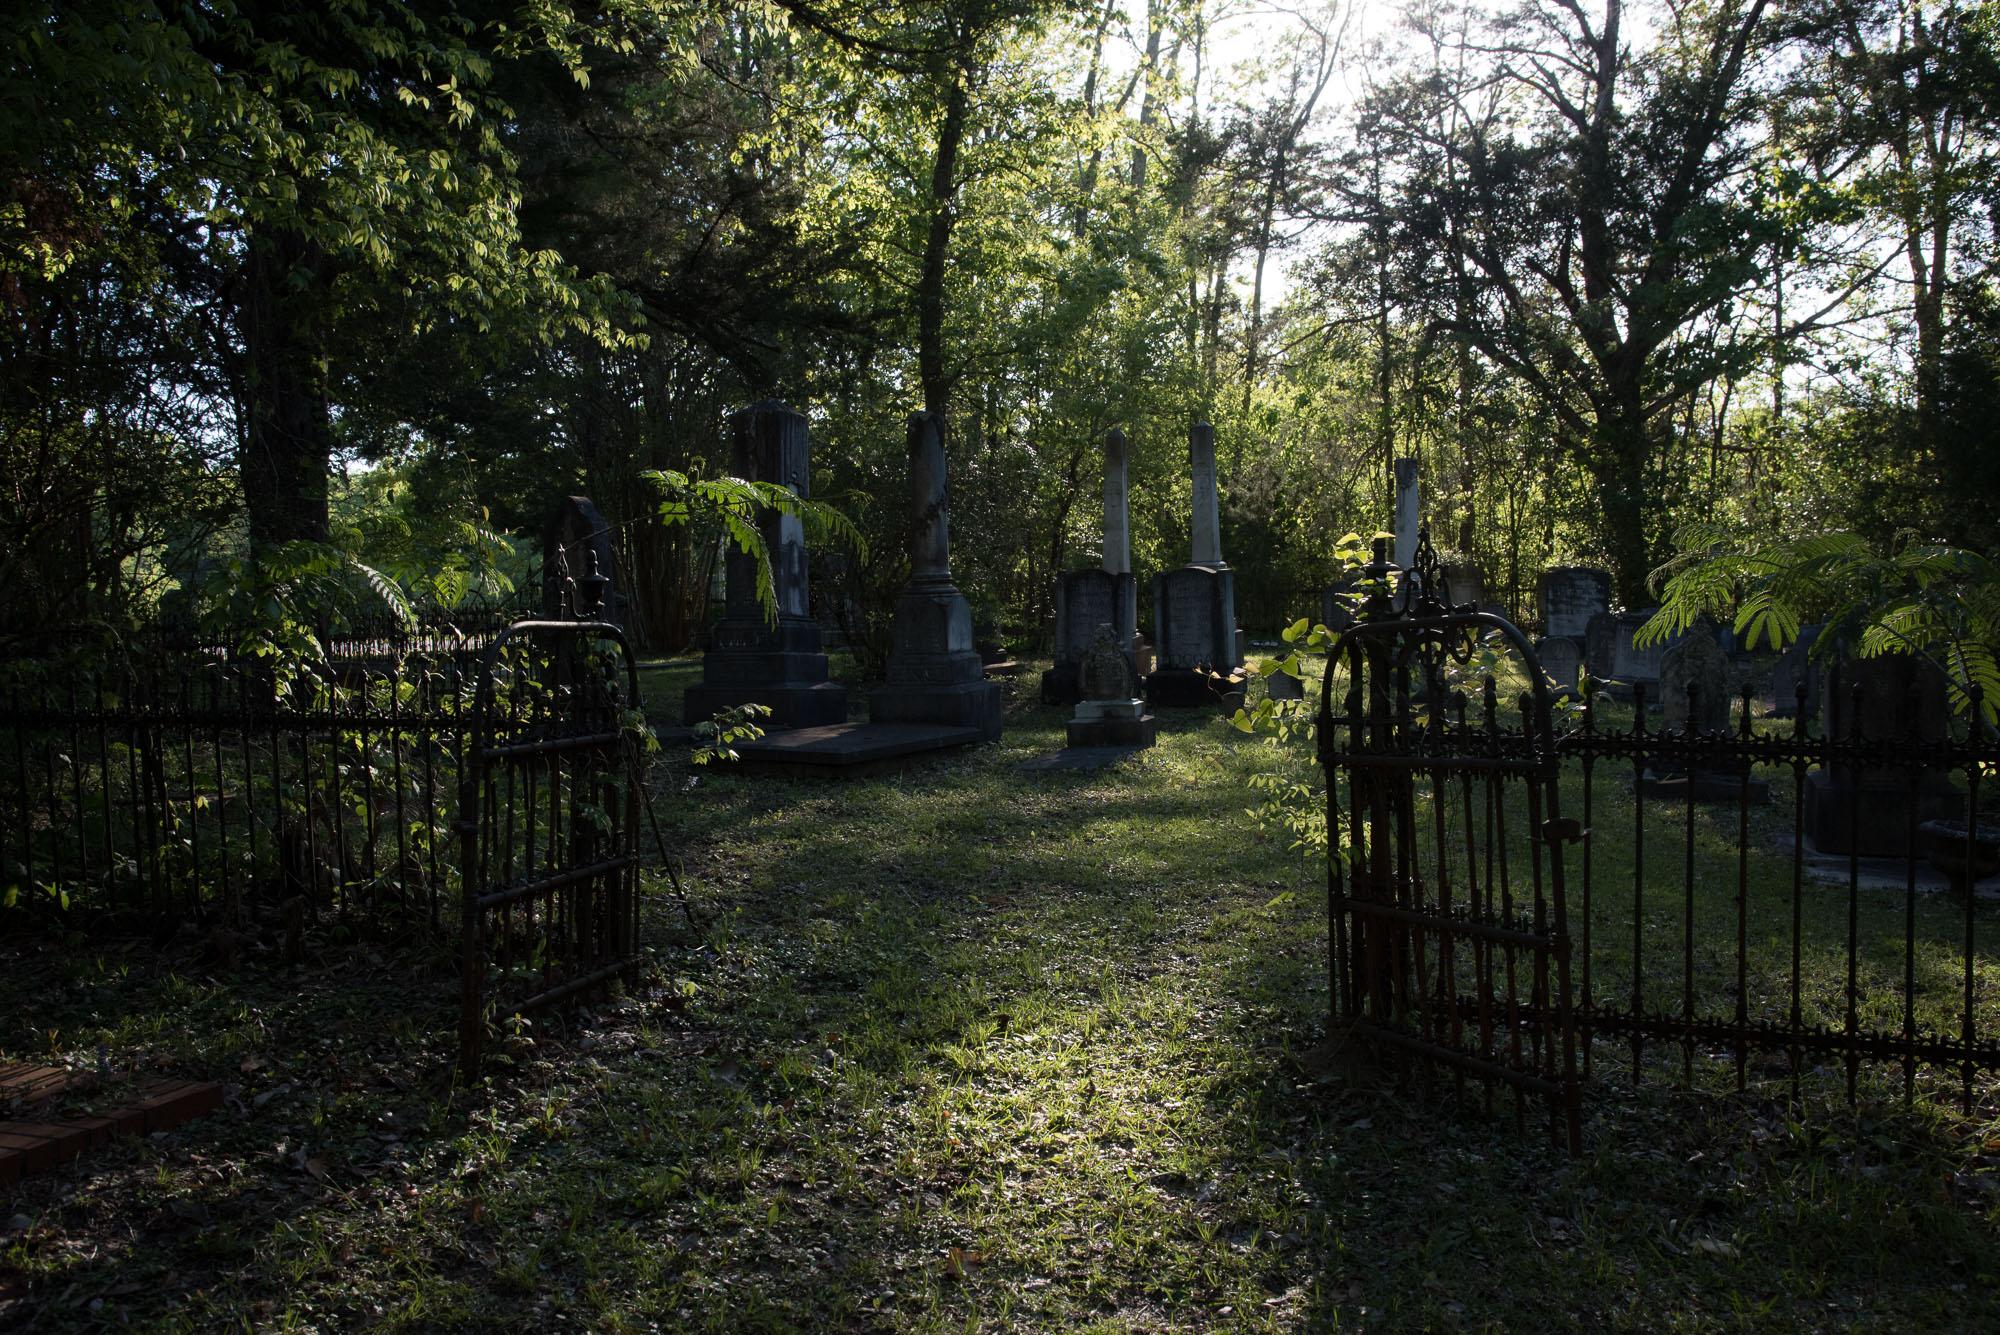  Slave Dwellings -   Cemetery near Faunsdale Plantation, Alabama  